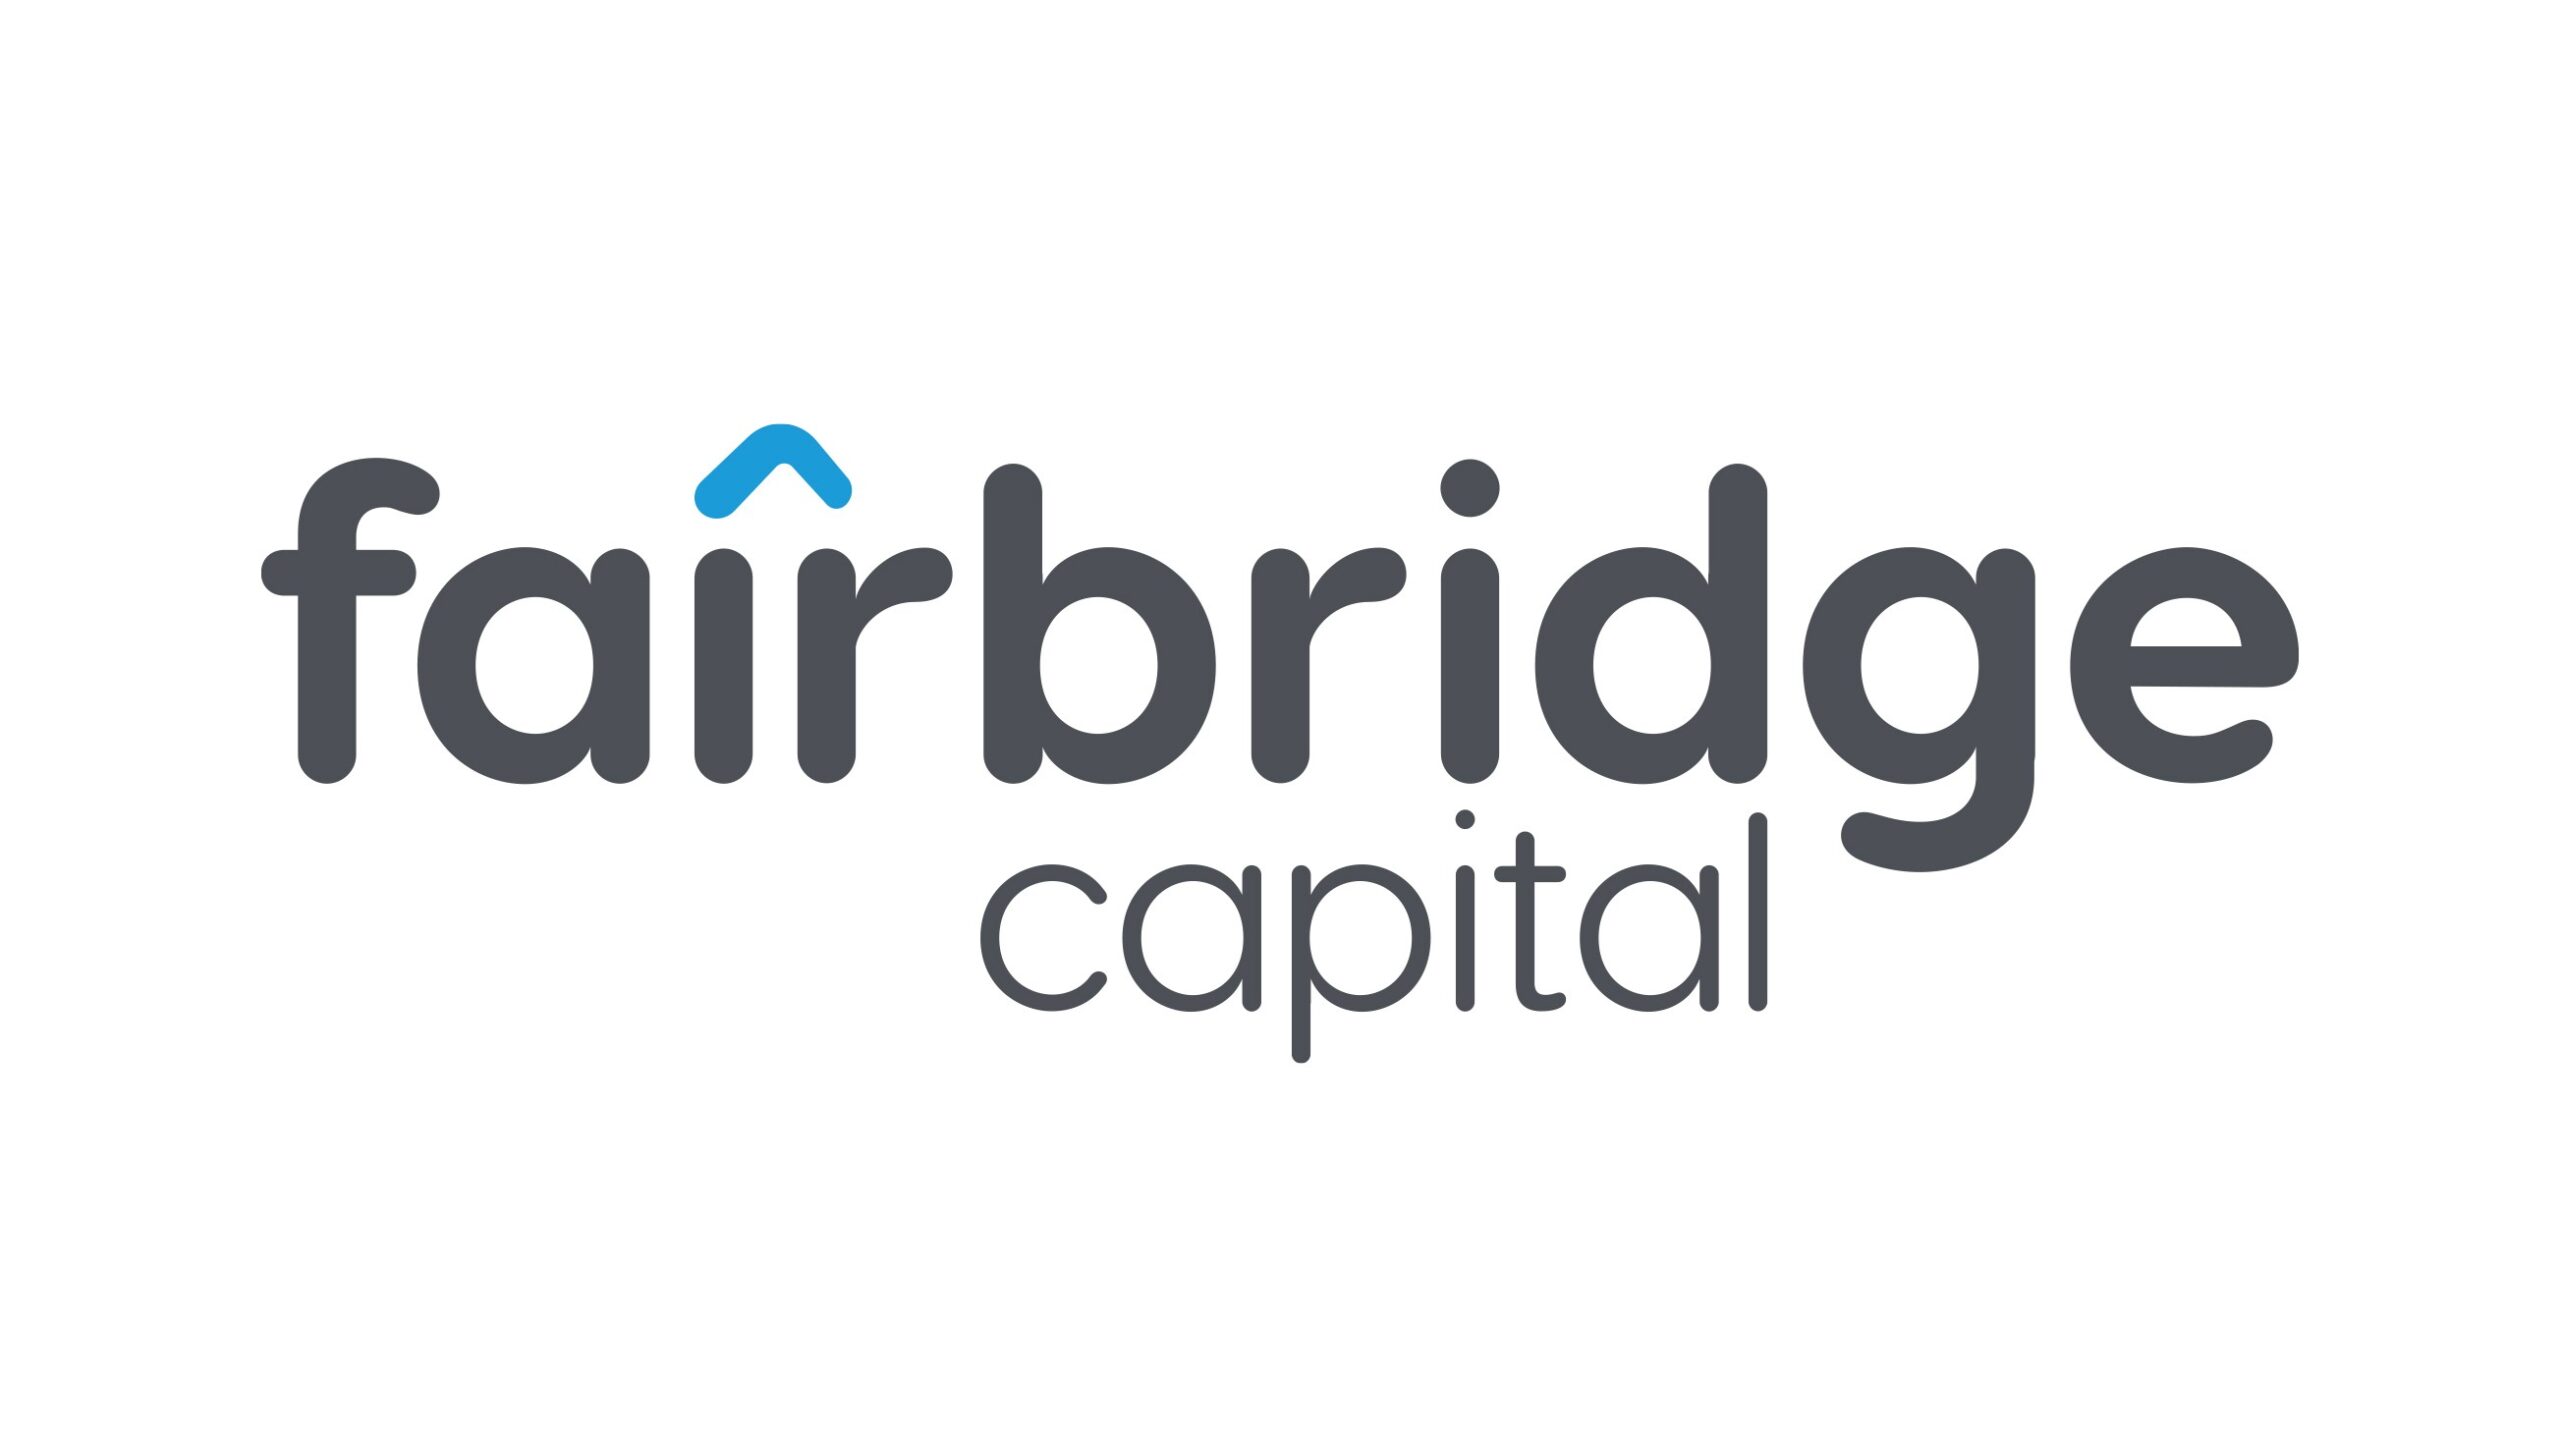 Fair bridge capital logo